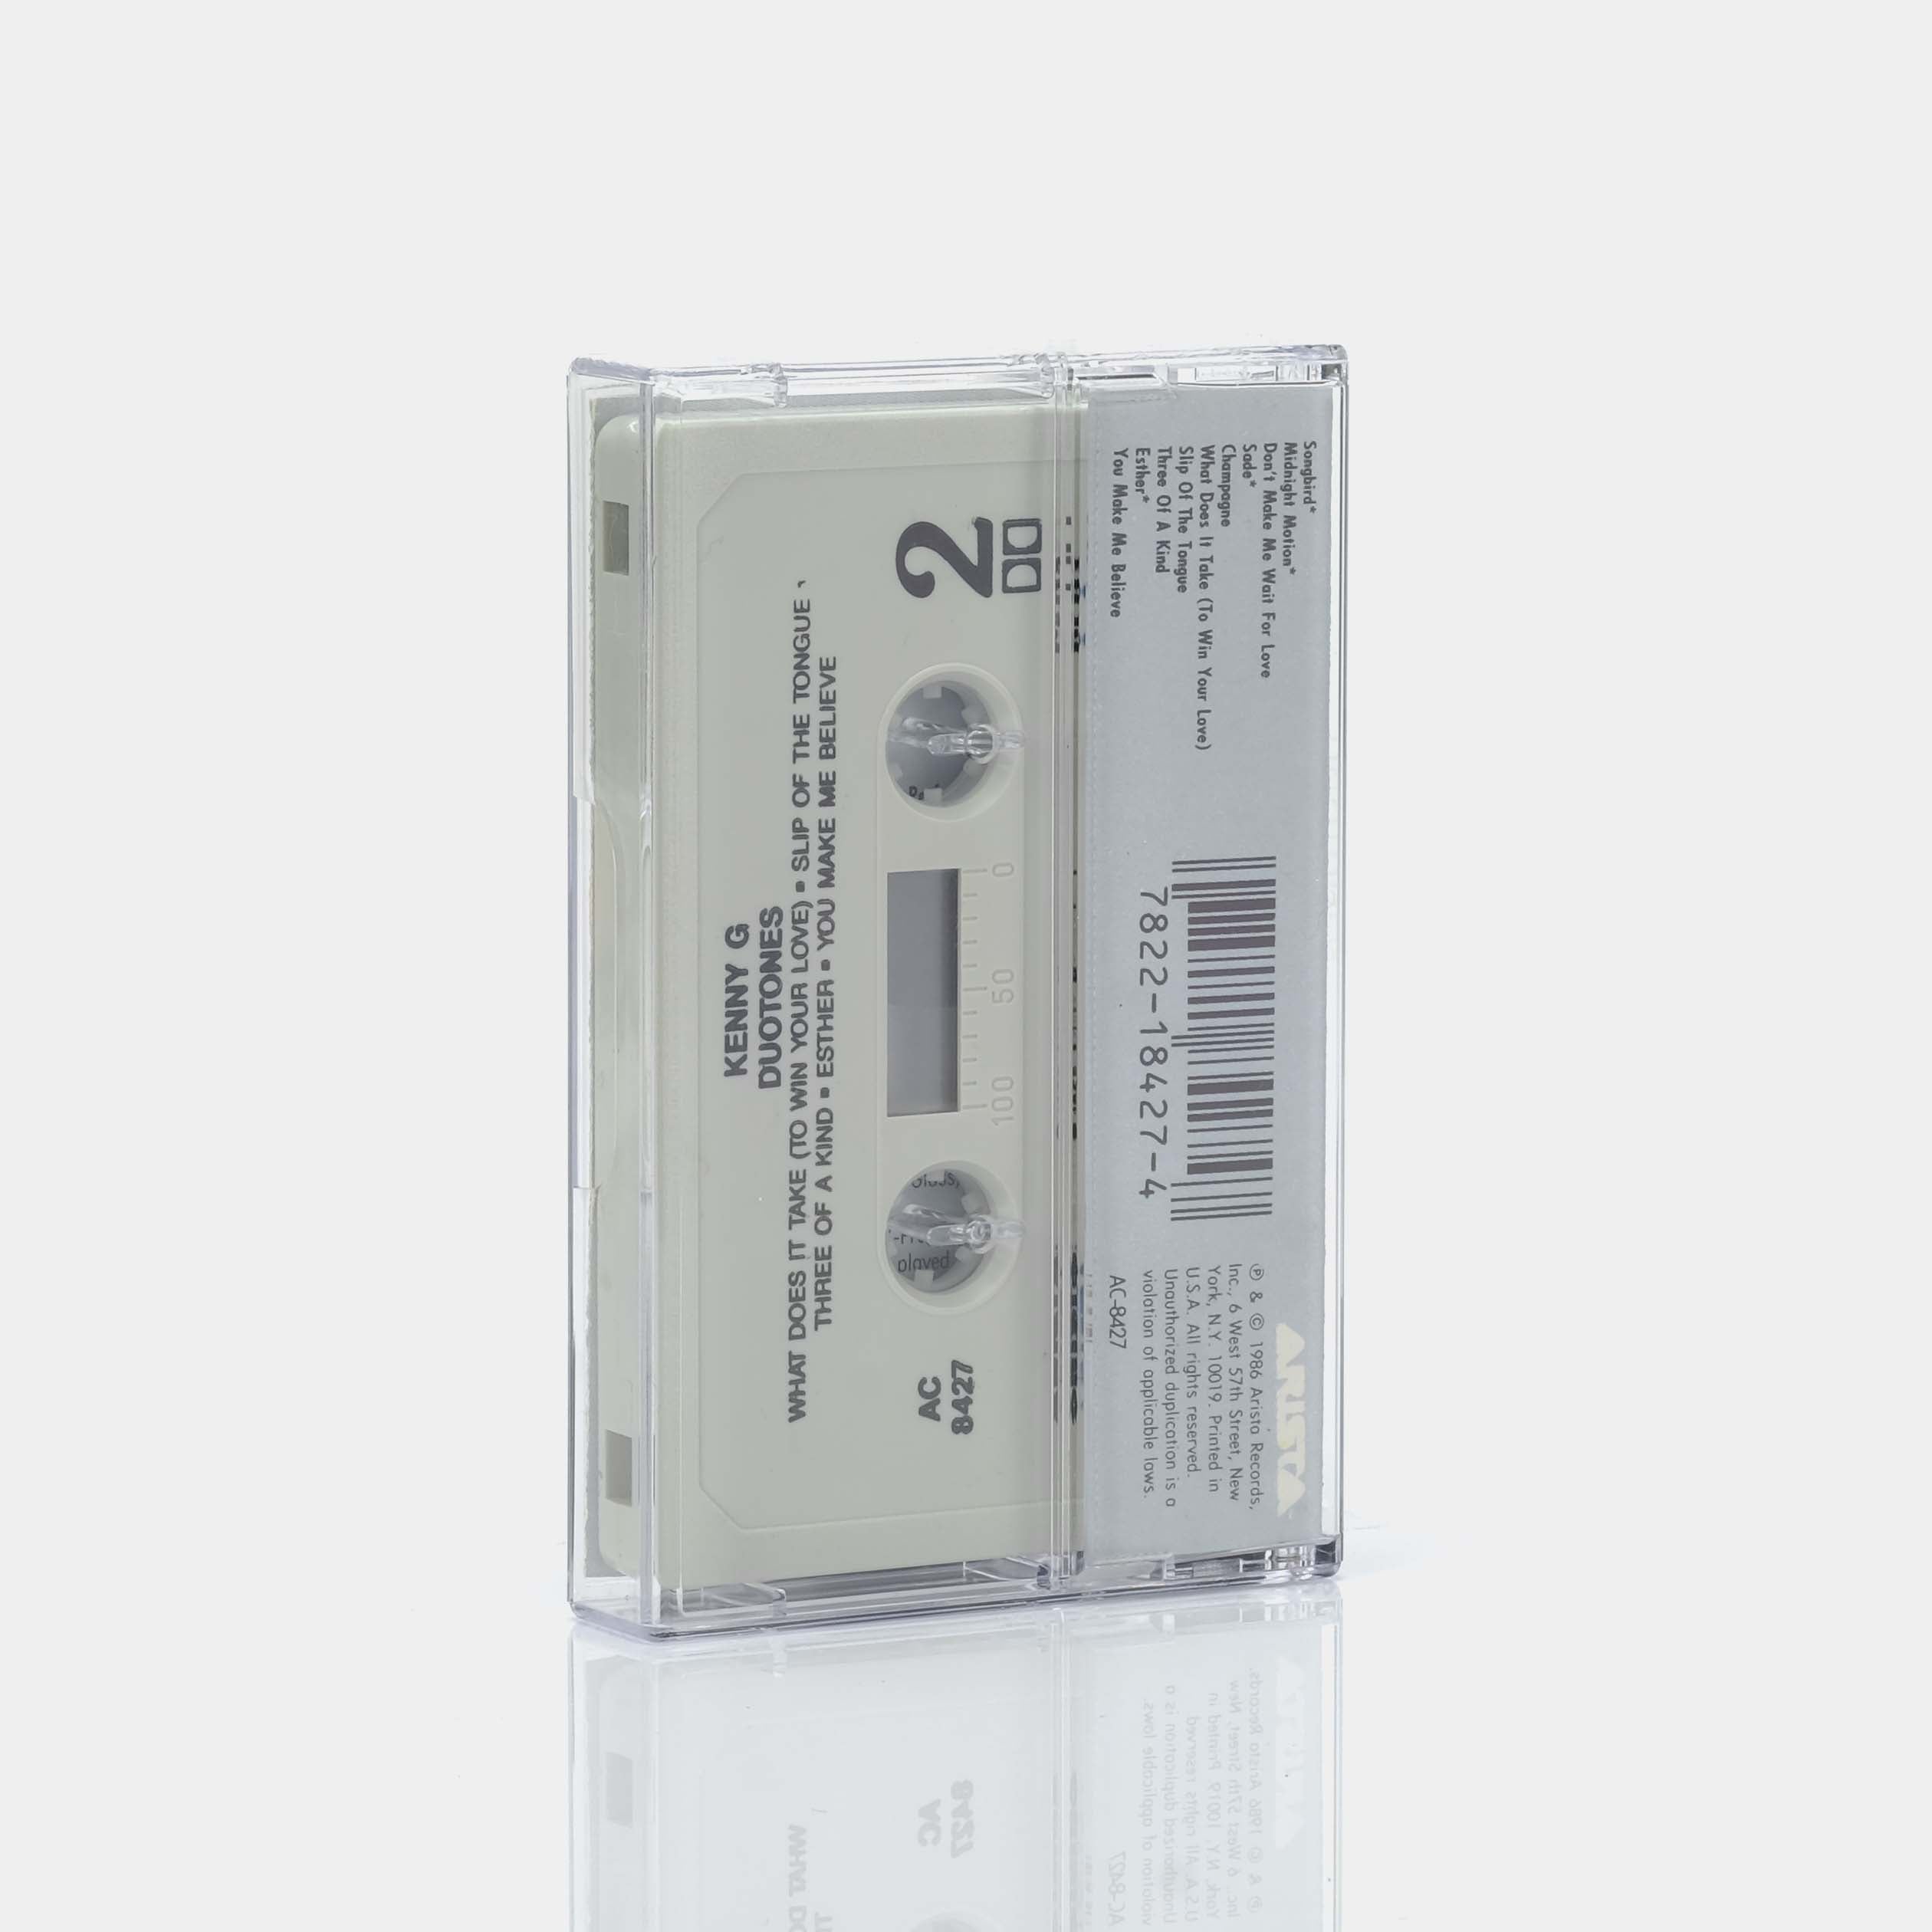 Kenny G - Duotones Cassette Tape